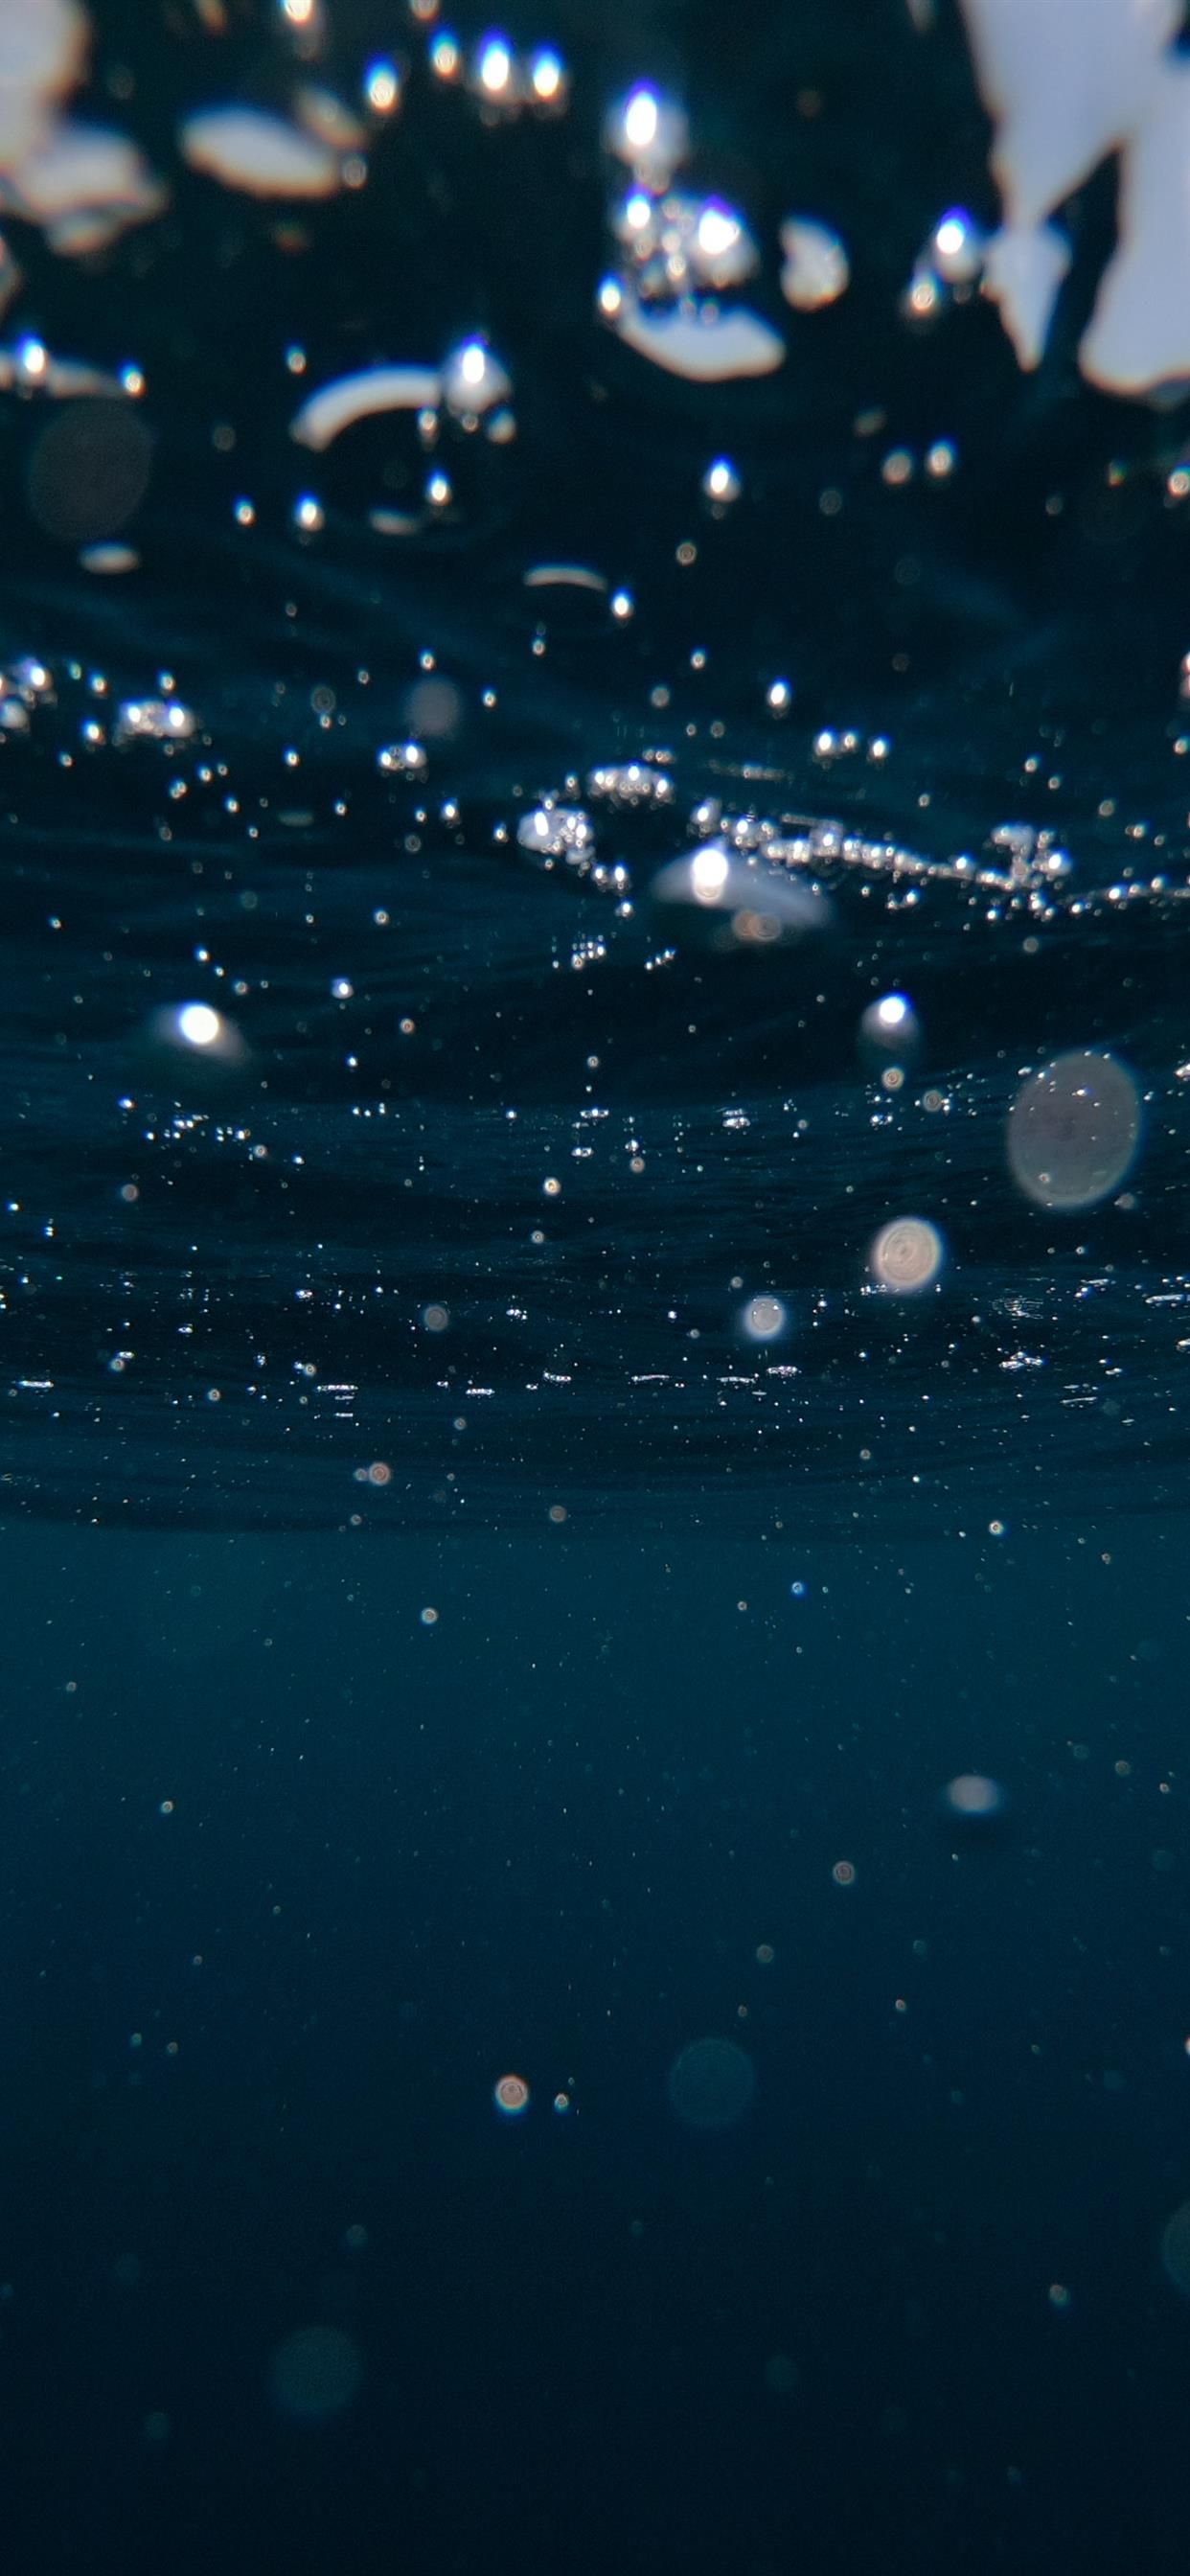 Underwater bubbles in a dark blue sea - Underwater, water